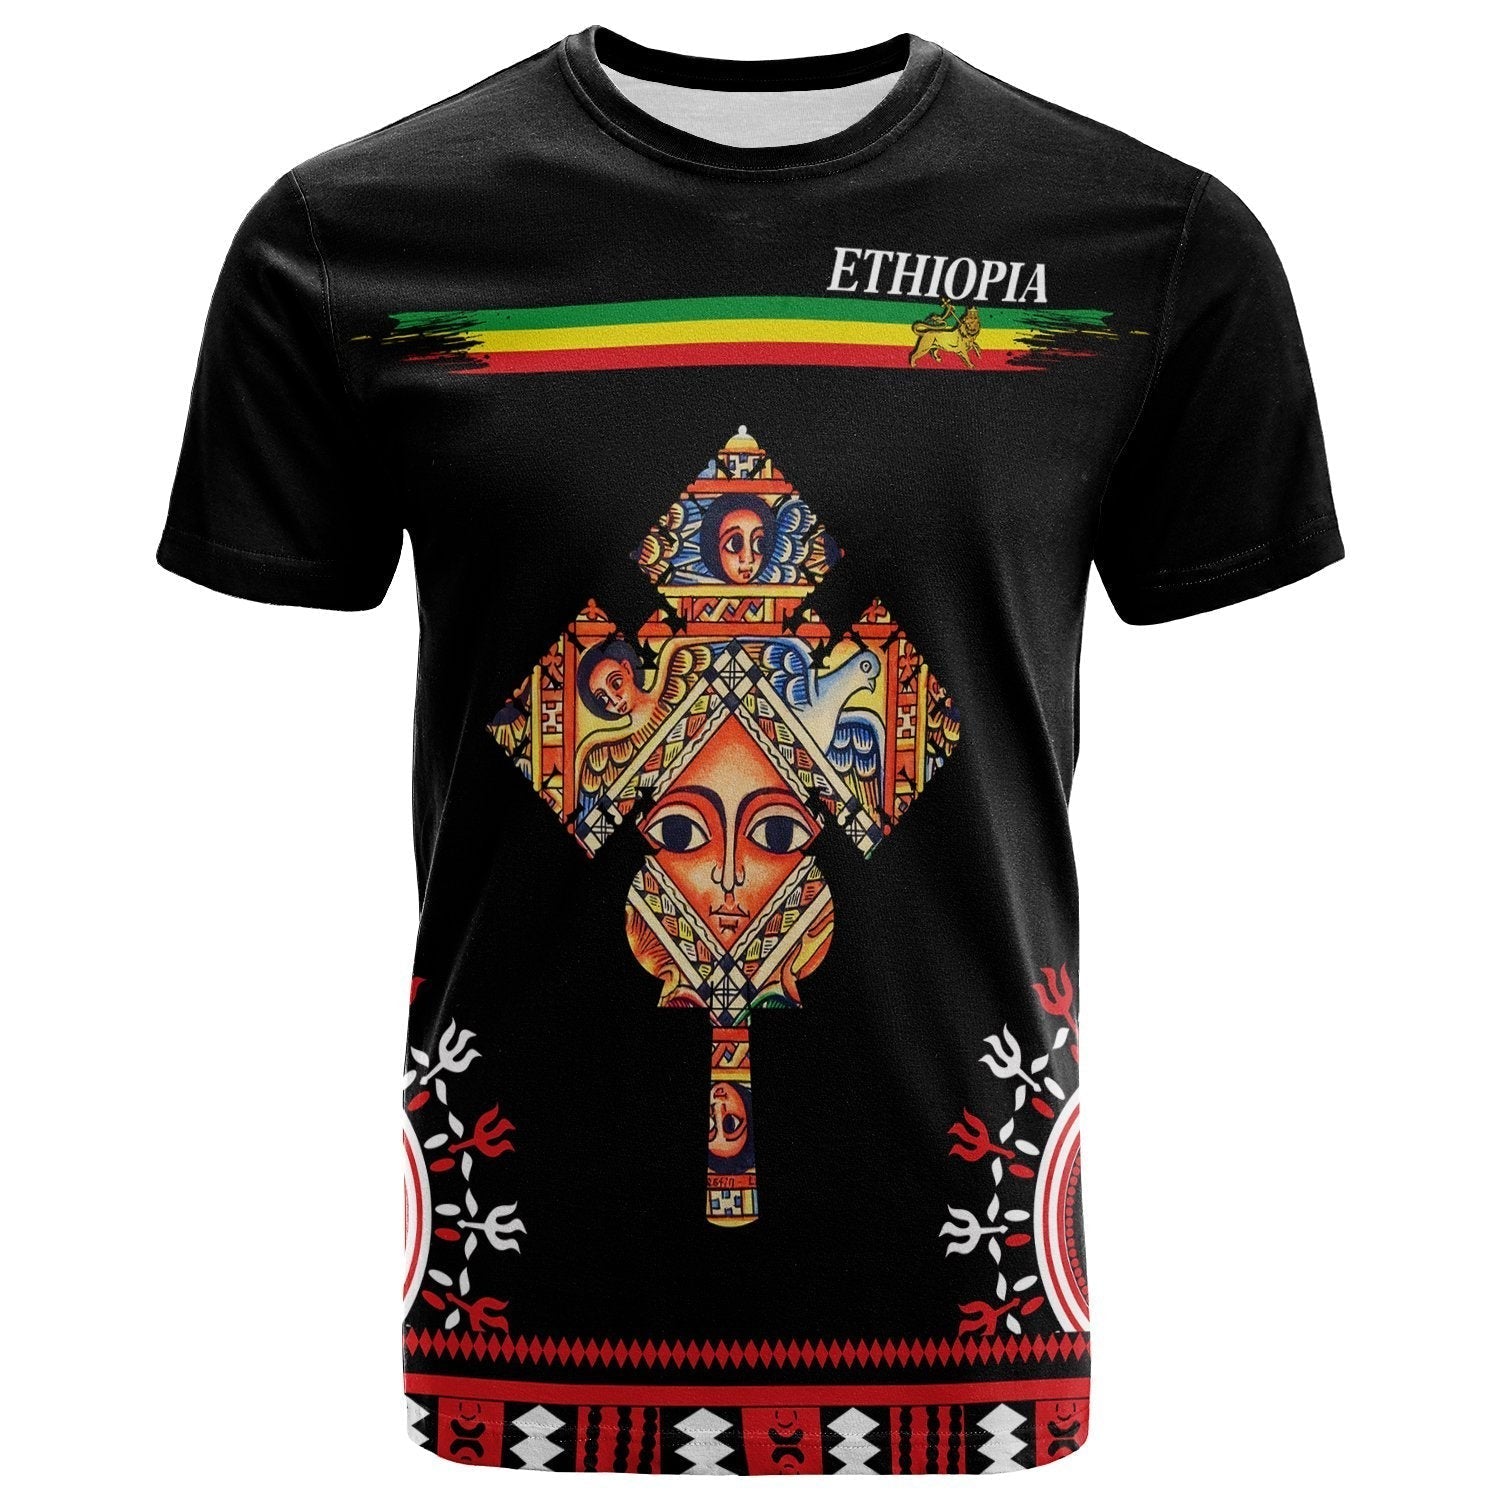 ethiopia-t-shirt-ethiopian-cross